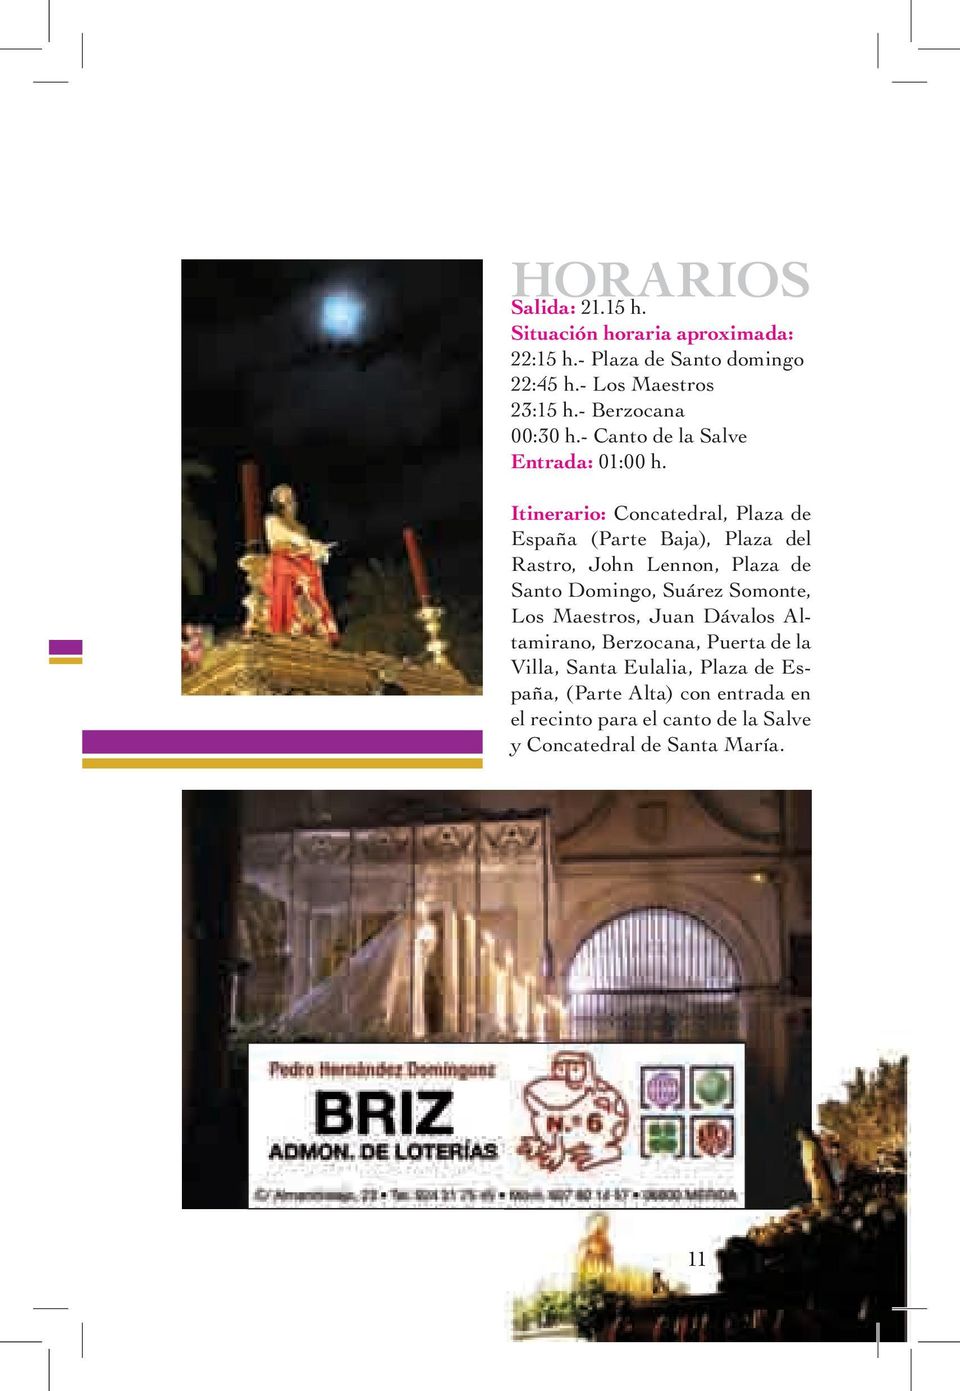 Itinerario: Concatedral, Plaza de España (Parte Baja), Plaza del Rastro, John Lennon, Plaza de Santo Domingo, Suárez Somonte,